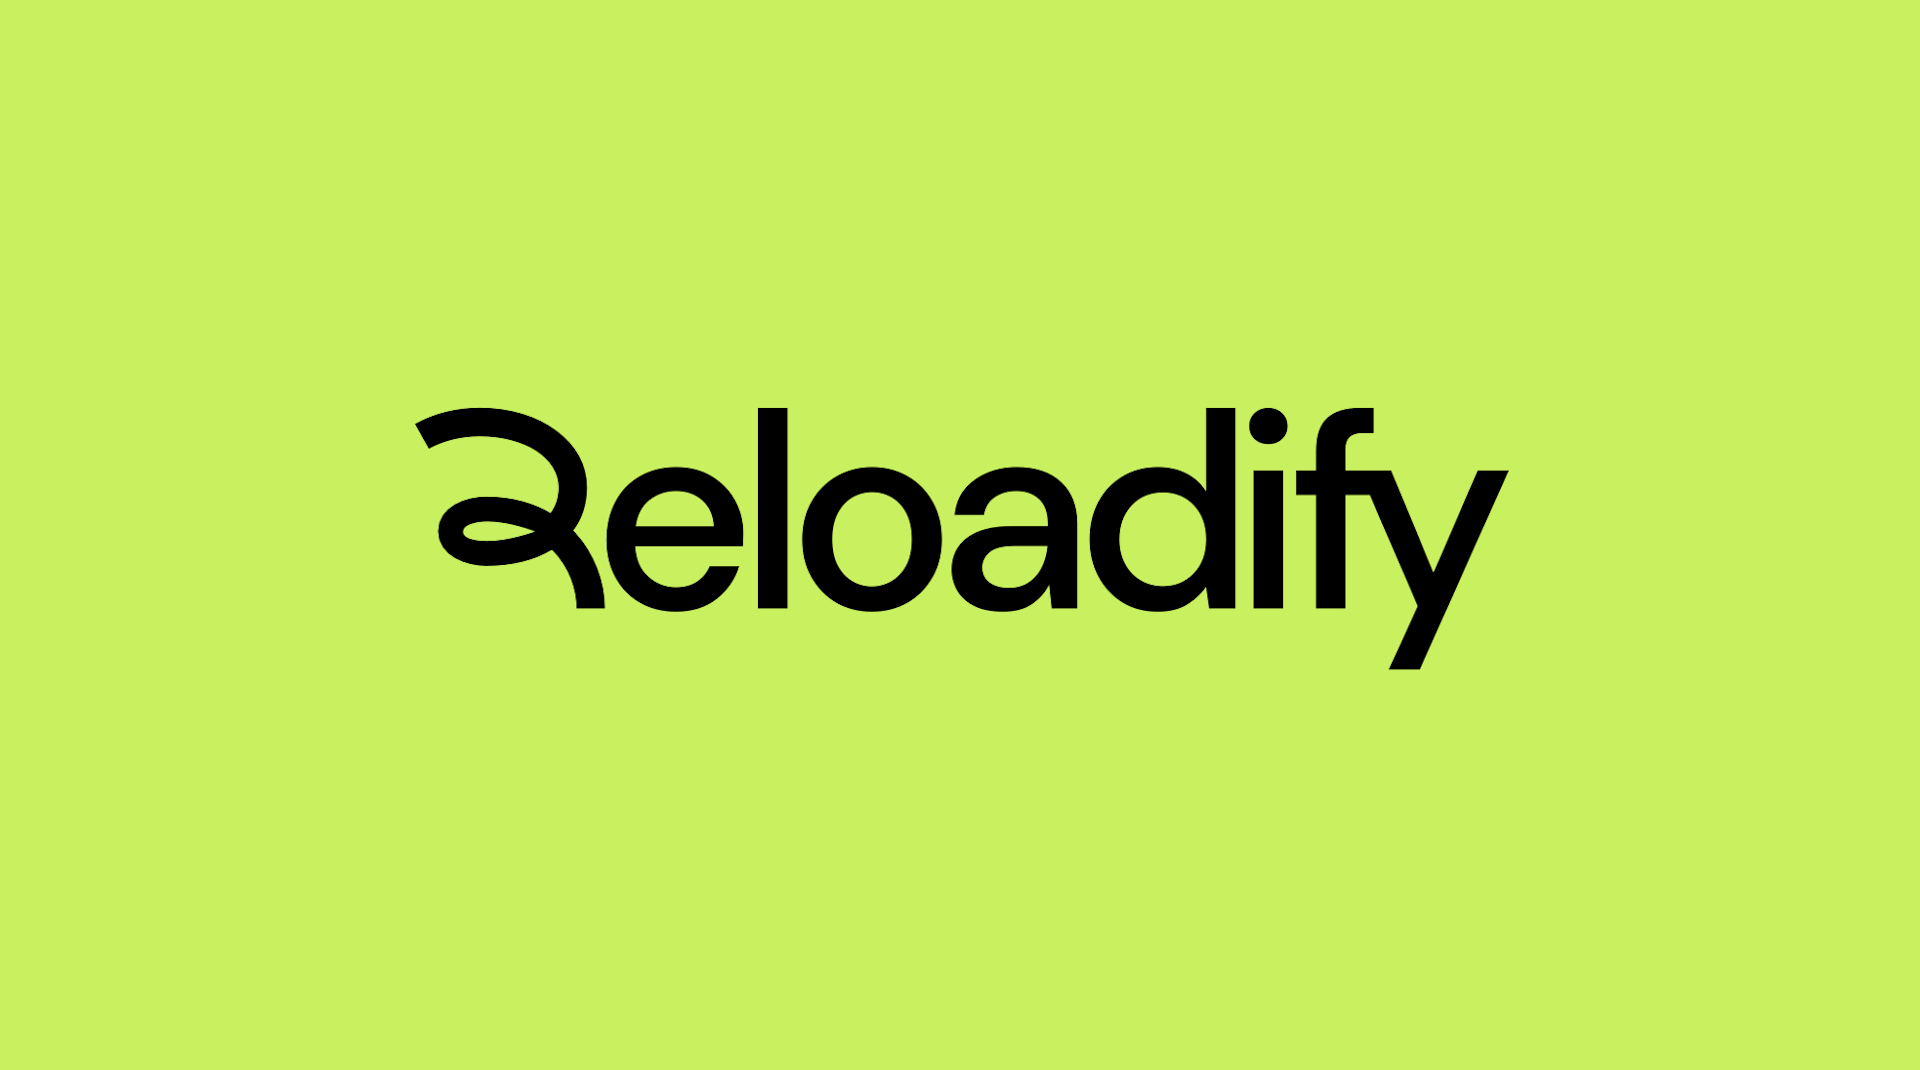 Reloadify met kleur